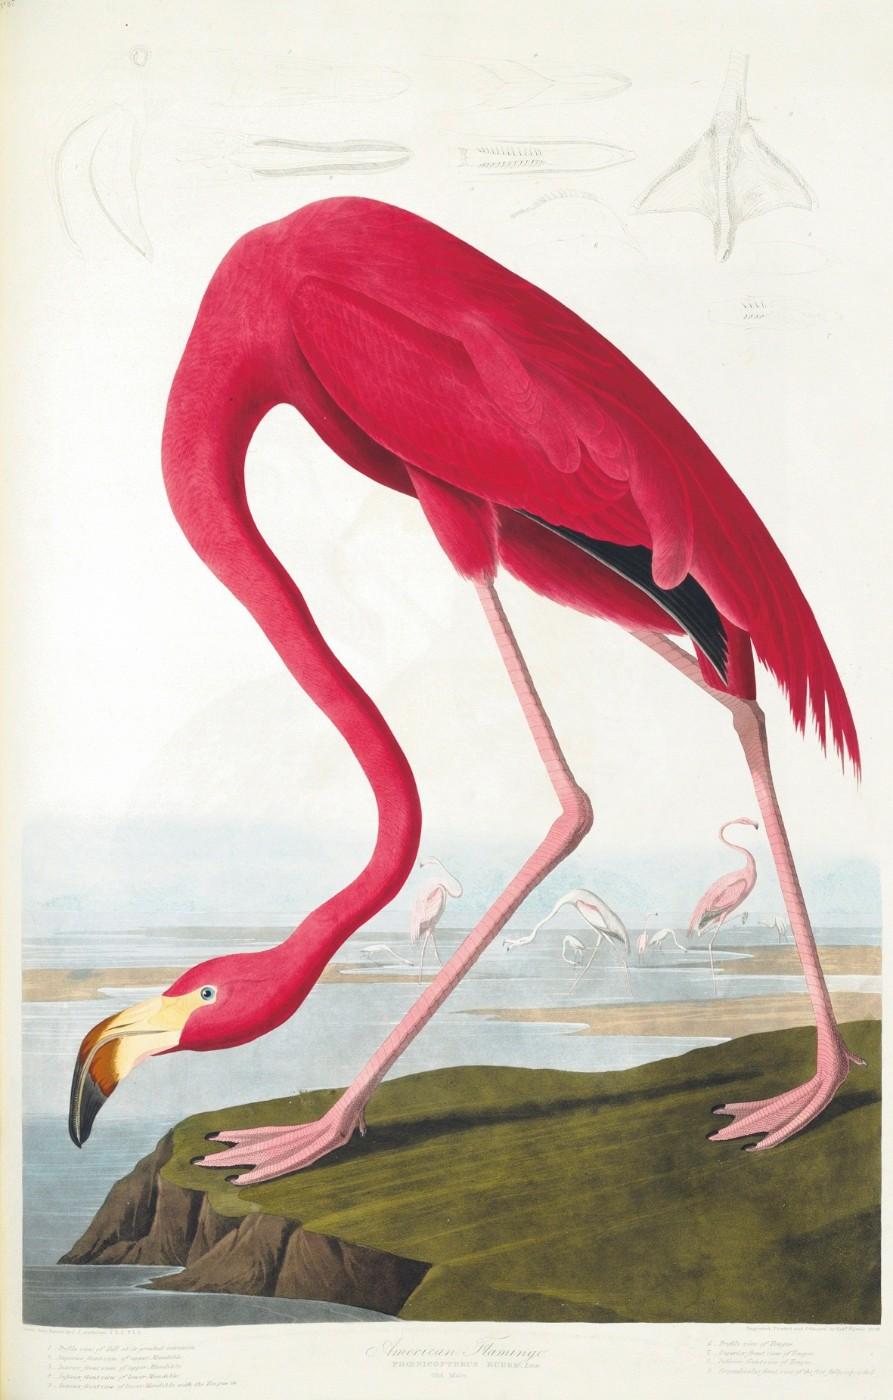 The American Flamingo, from John James Audubon's "The Birds of America"